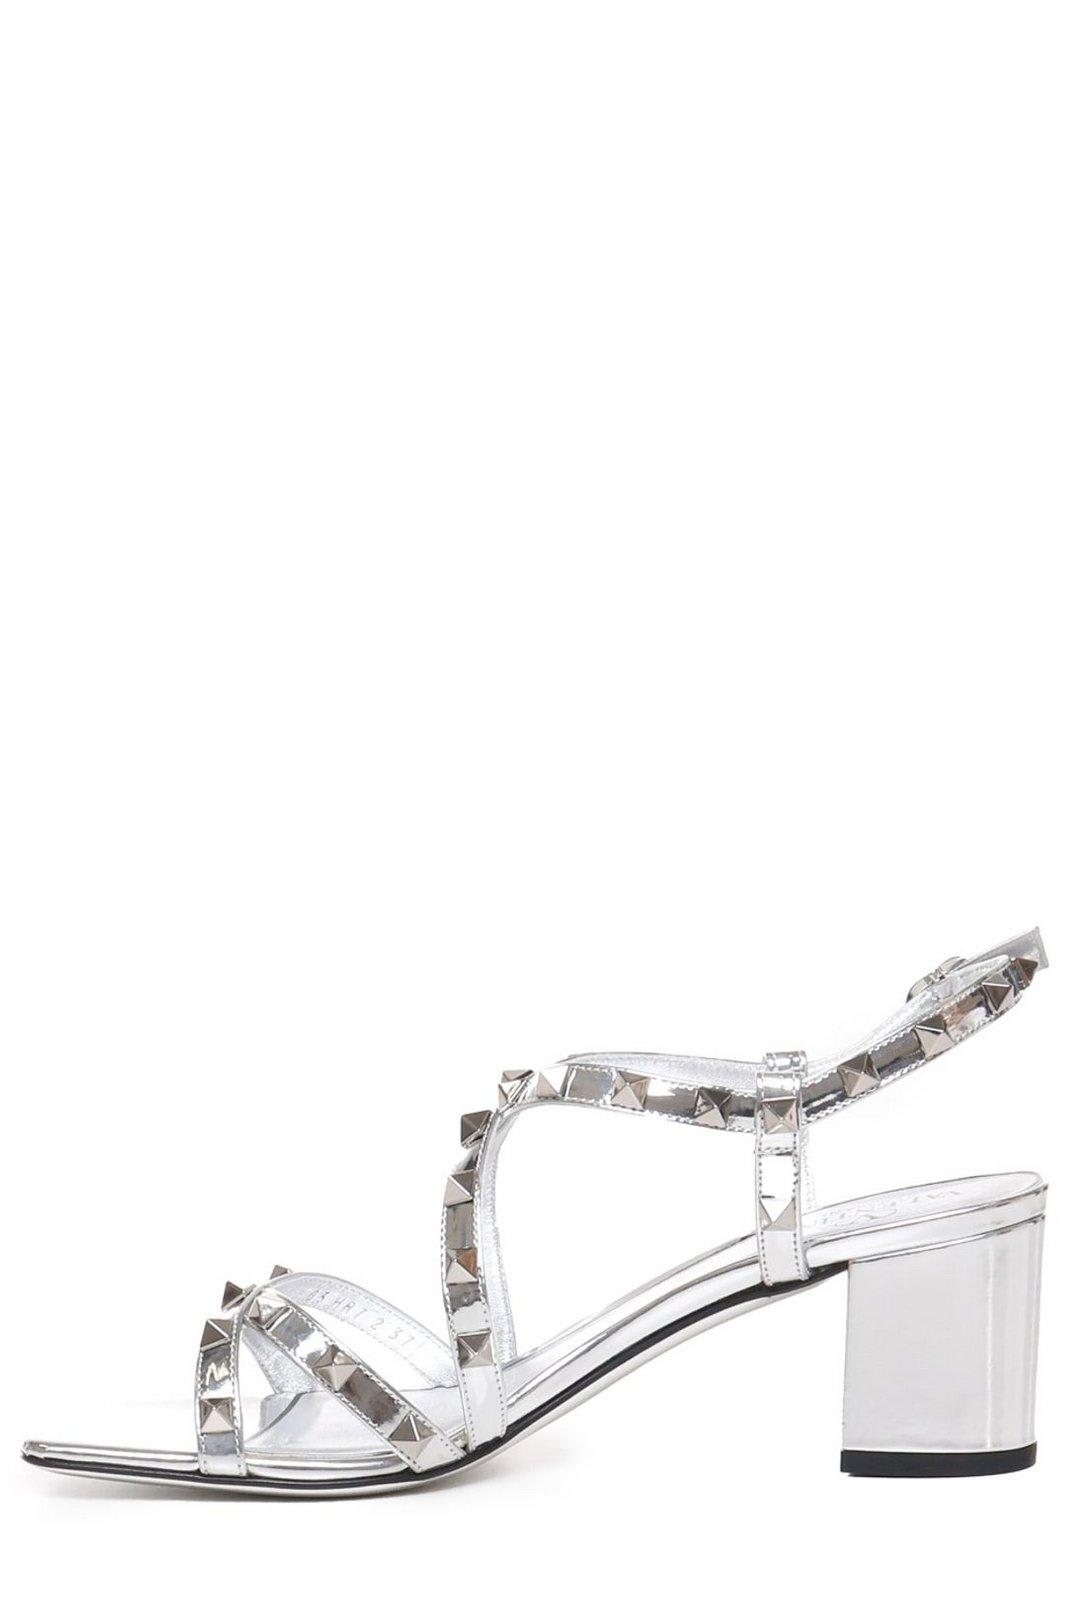 Shop Valentino Garavani Rockstud Open Toe Sandals In Silver